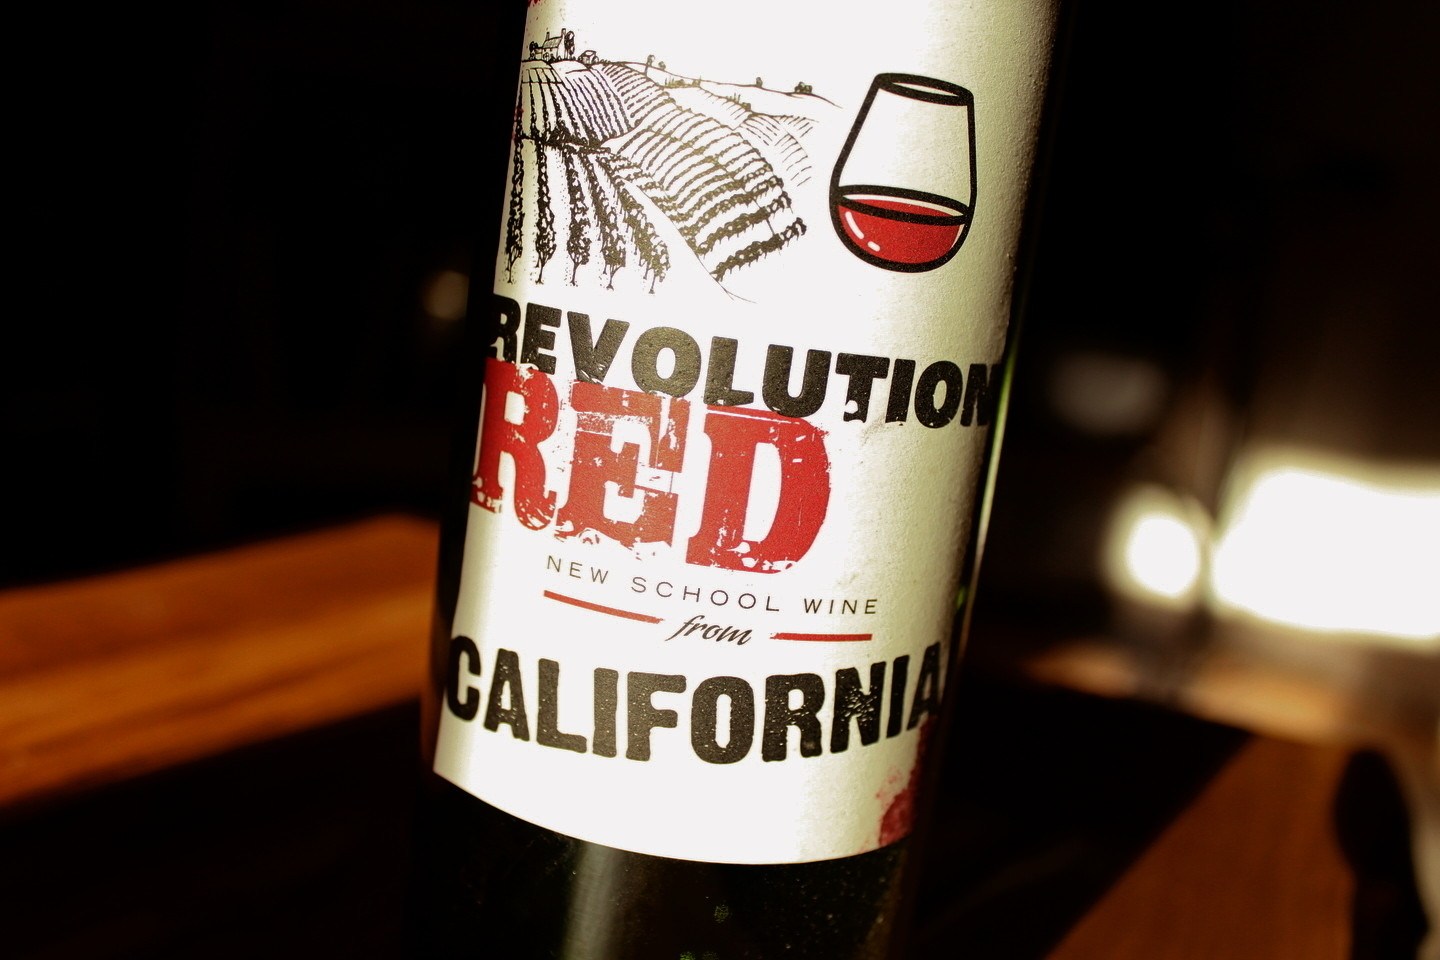 Revolution red